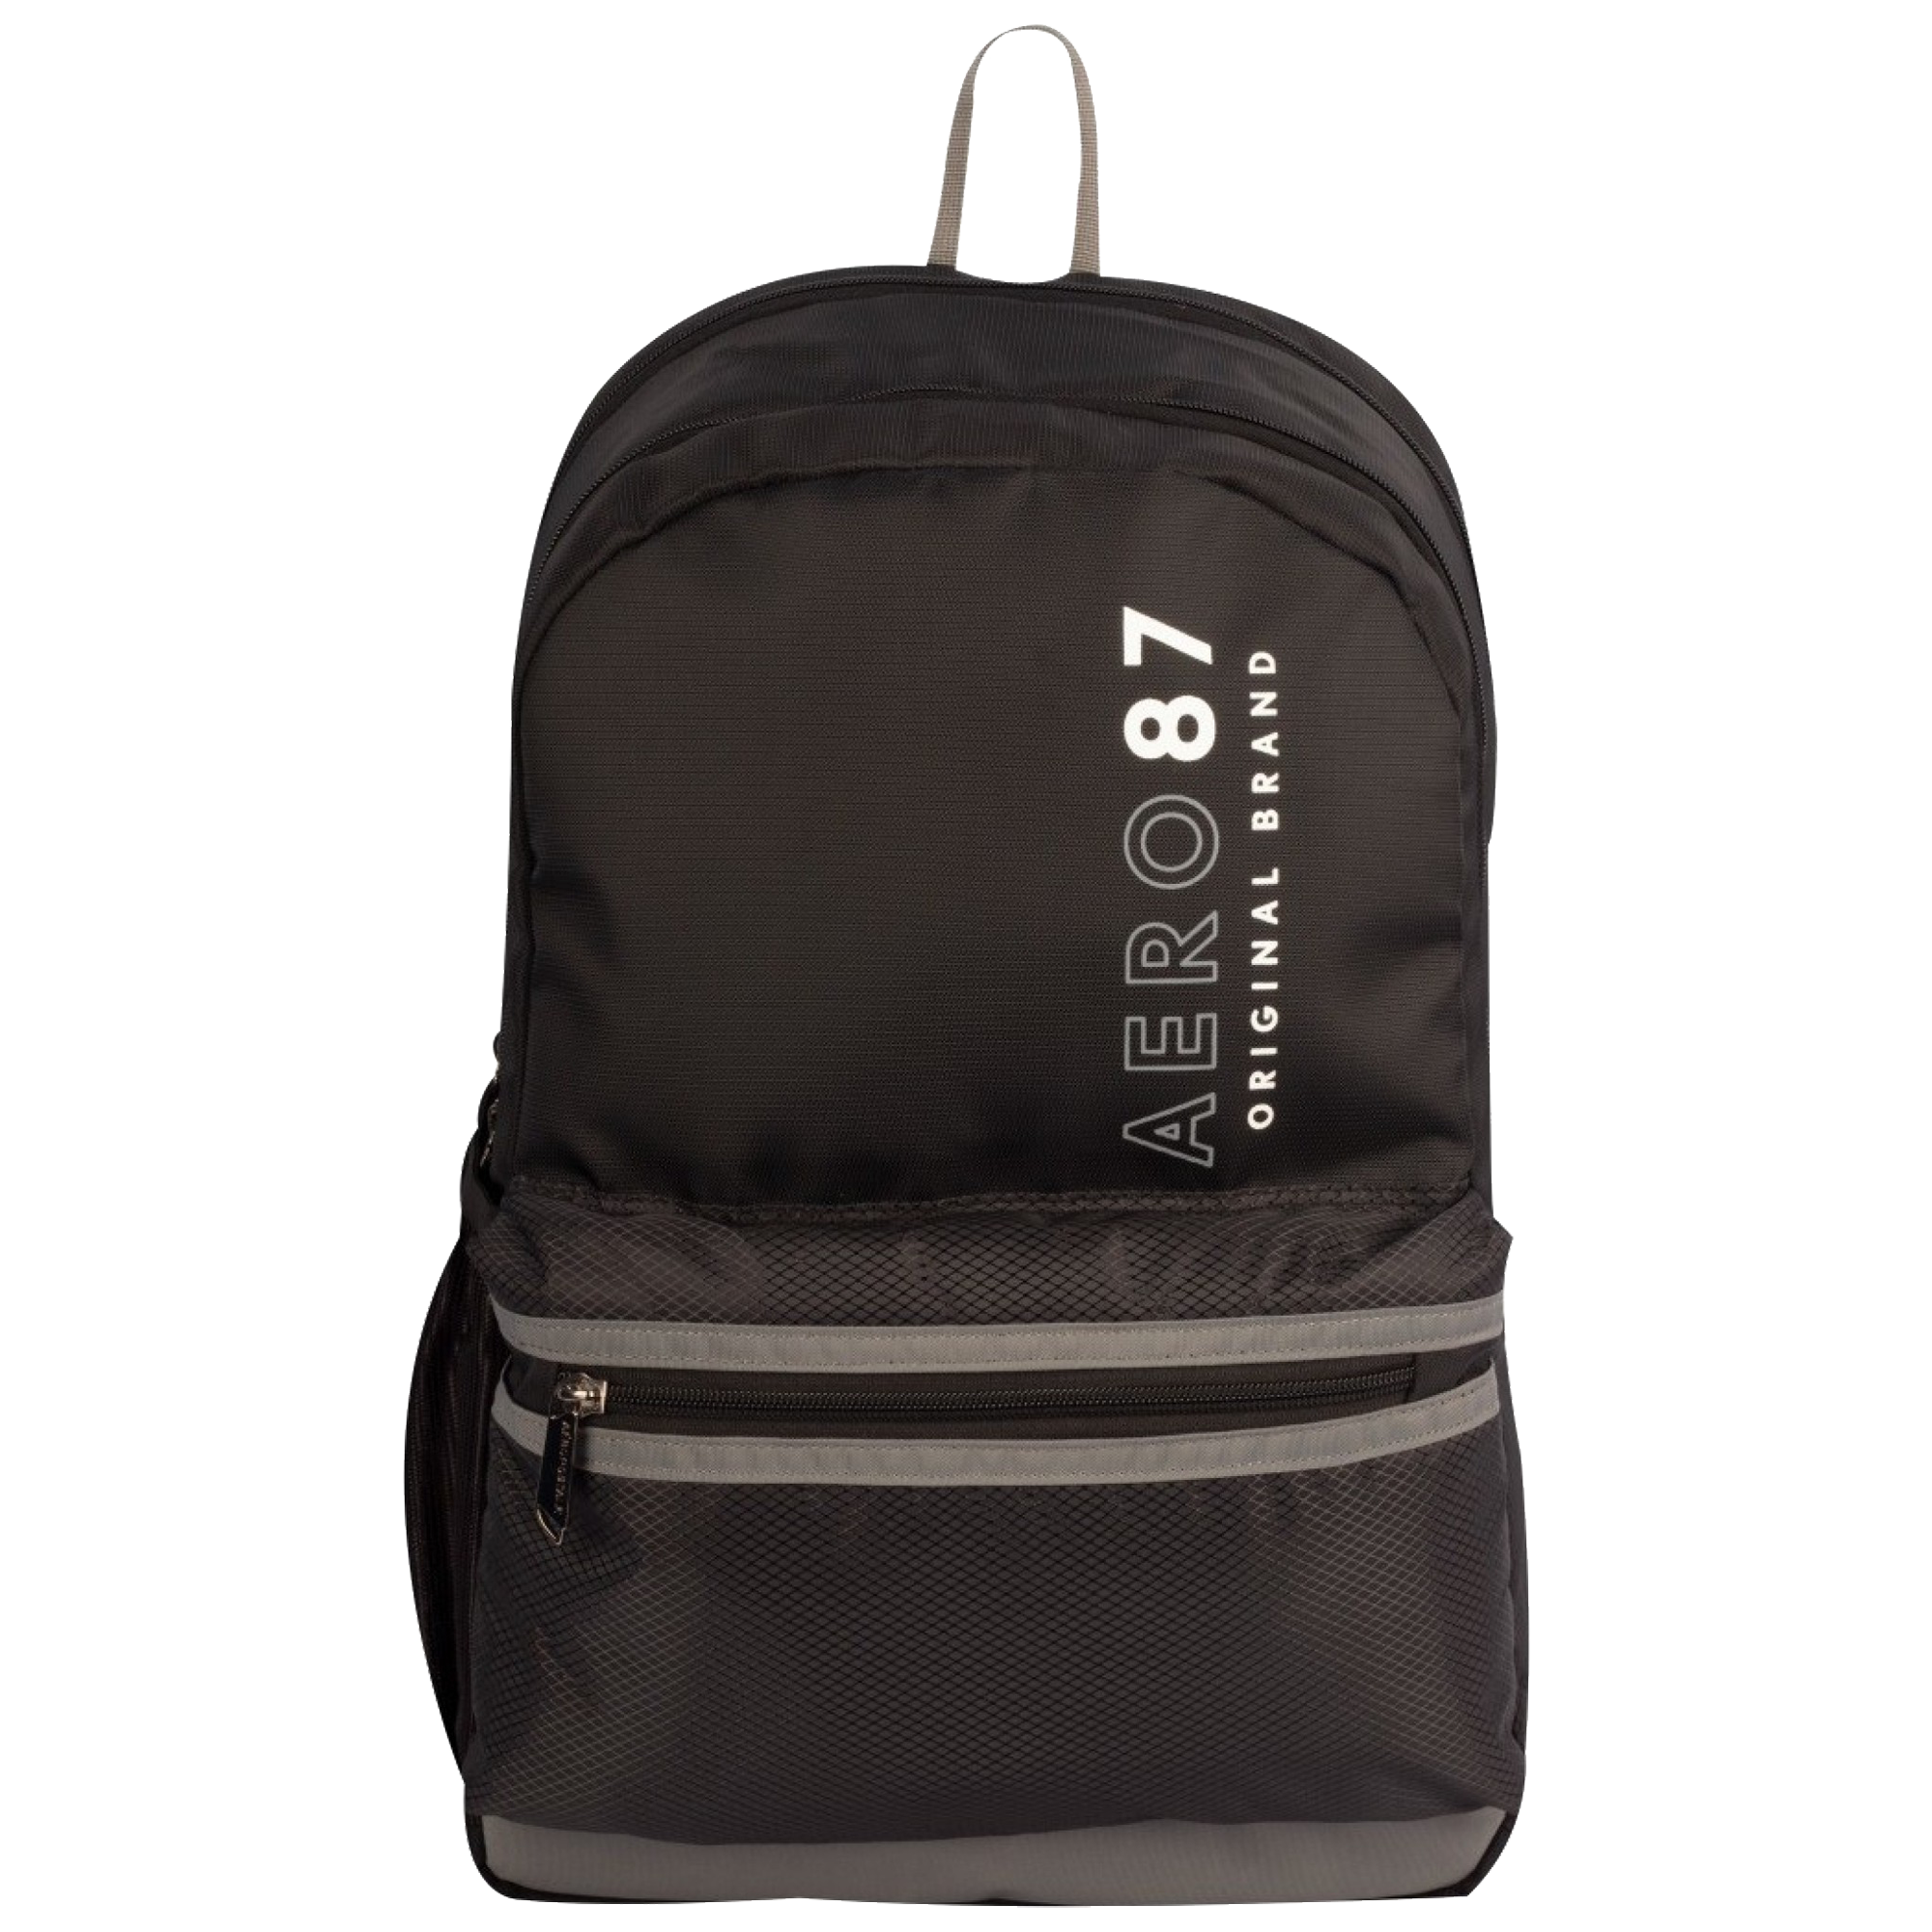 Aeropostale Take Off 20 Litres Nylon Backpack (Waterproof, AERO-BP-1001-BLK_G, Black/Grey)